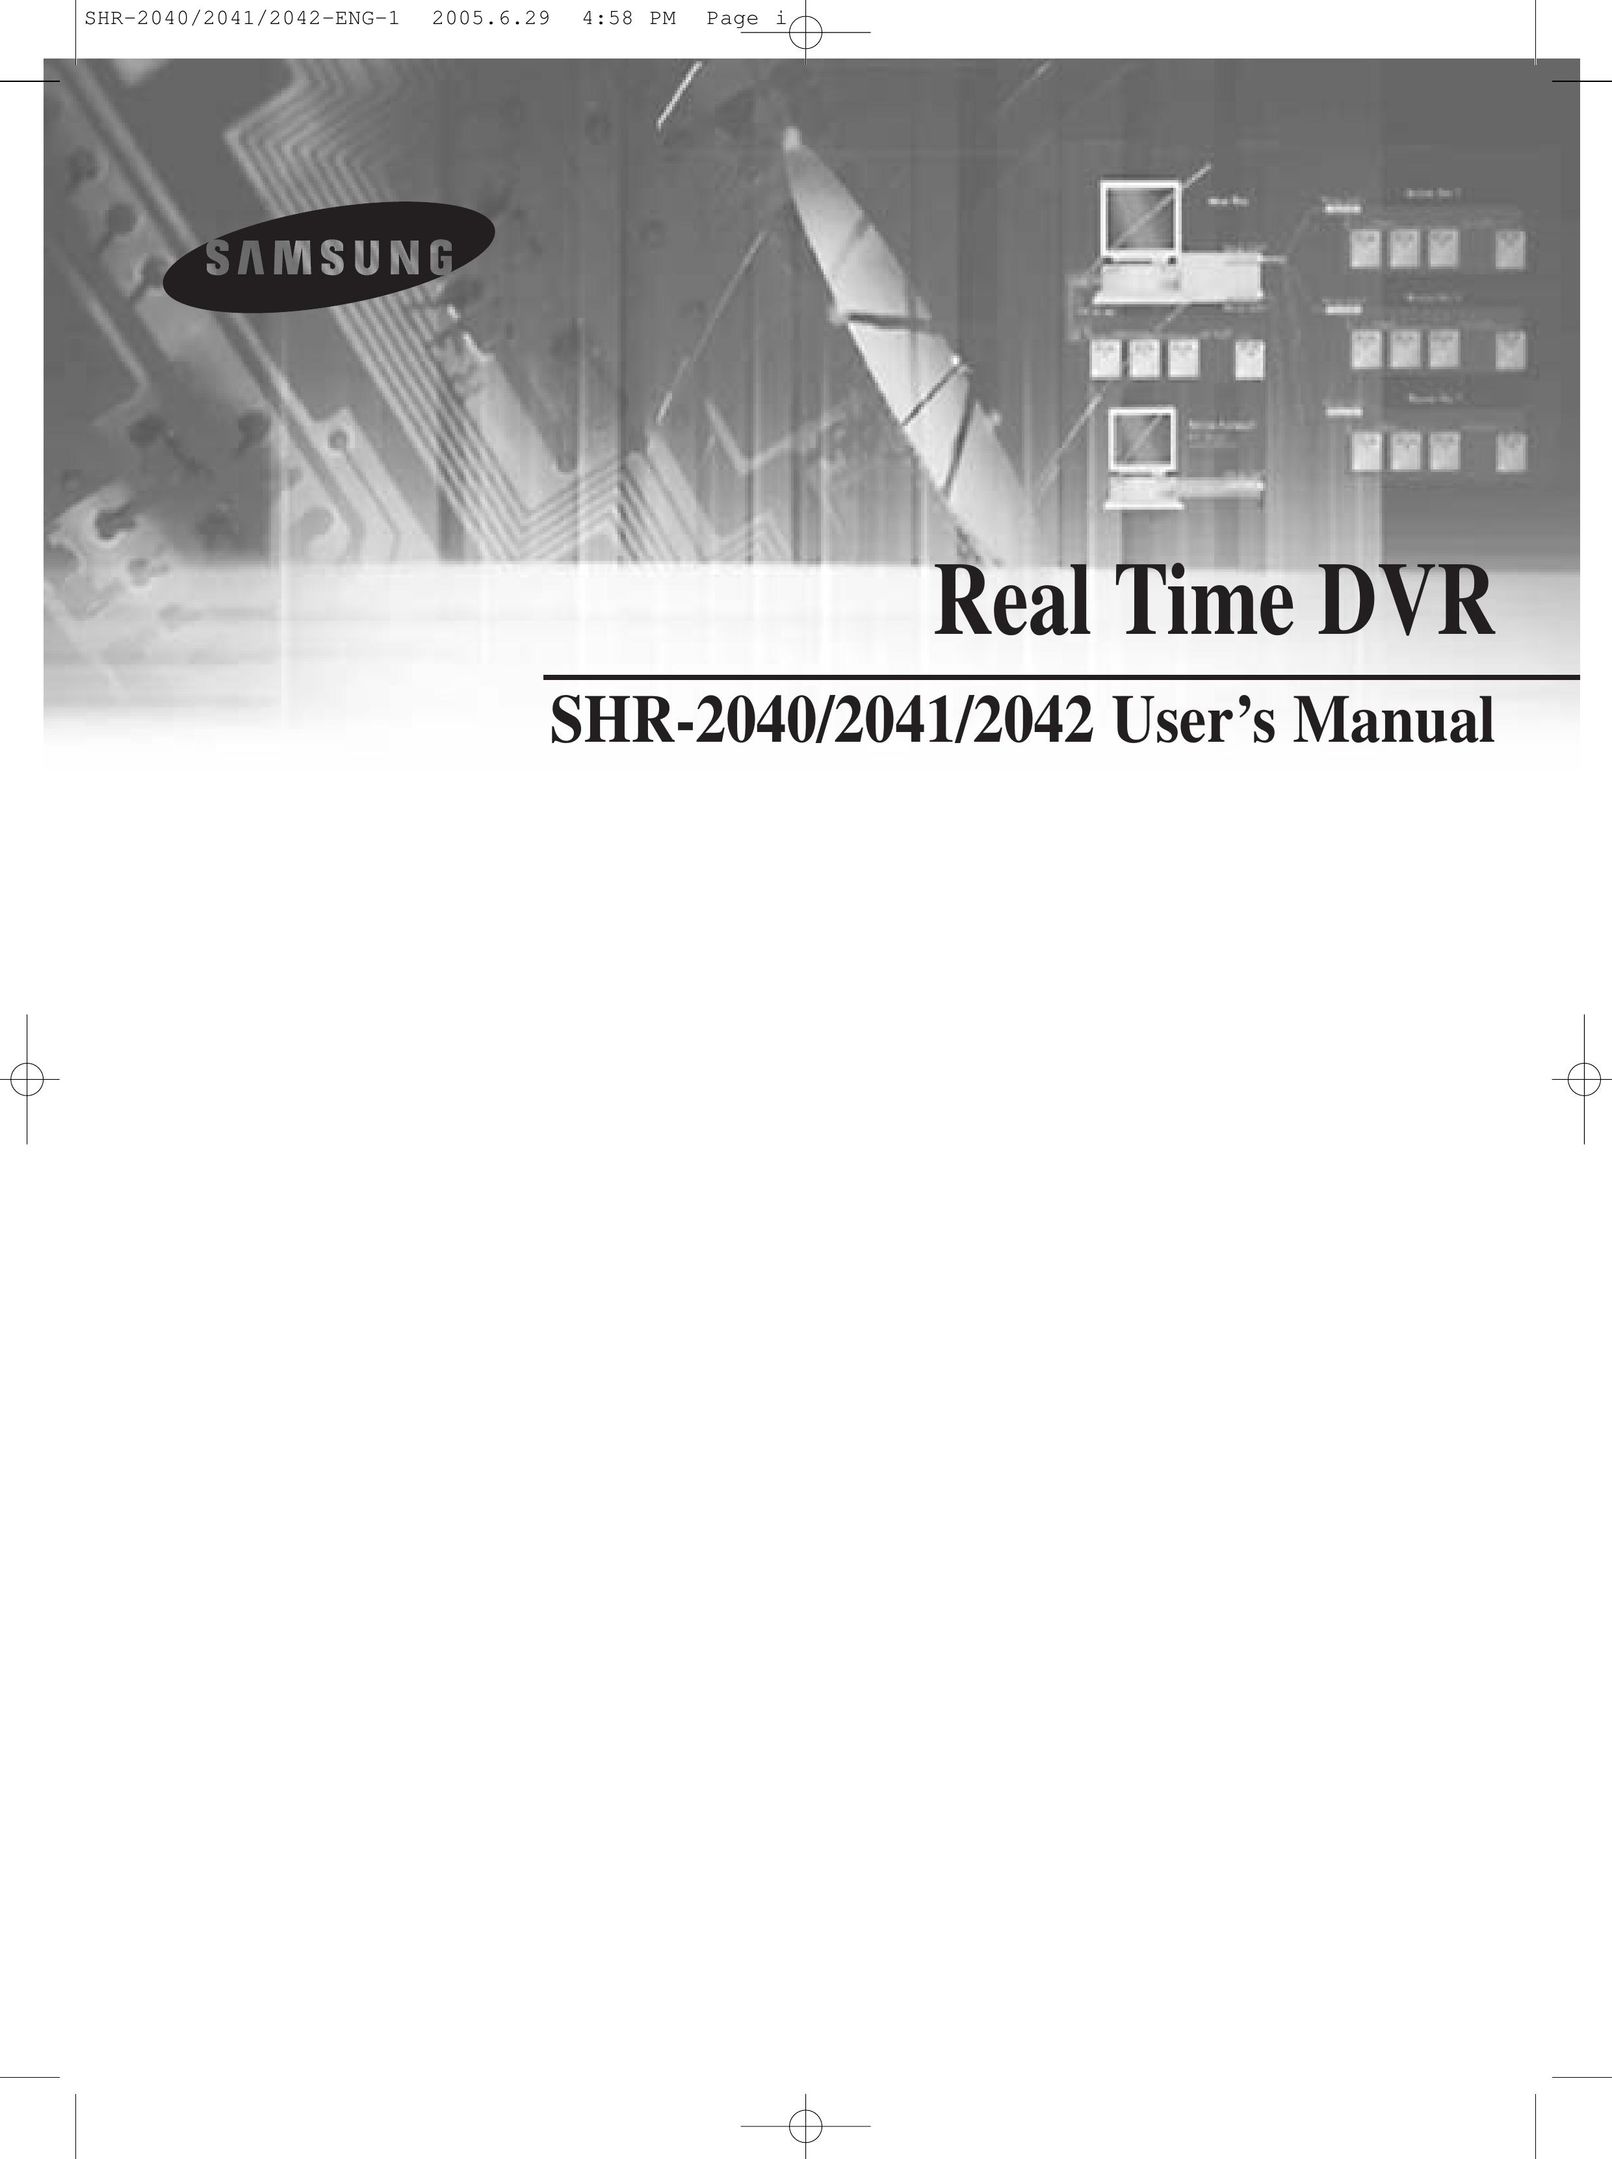 Samsung SHR-2042 DVR User Manual